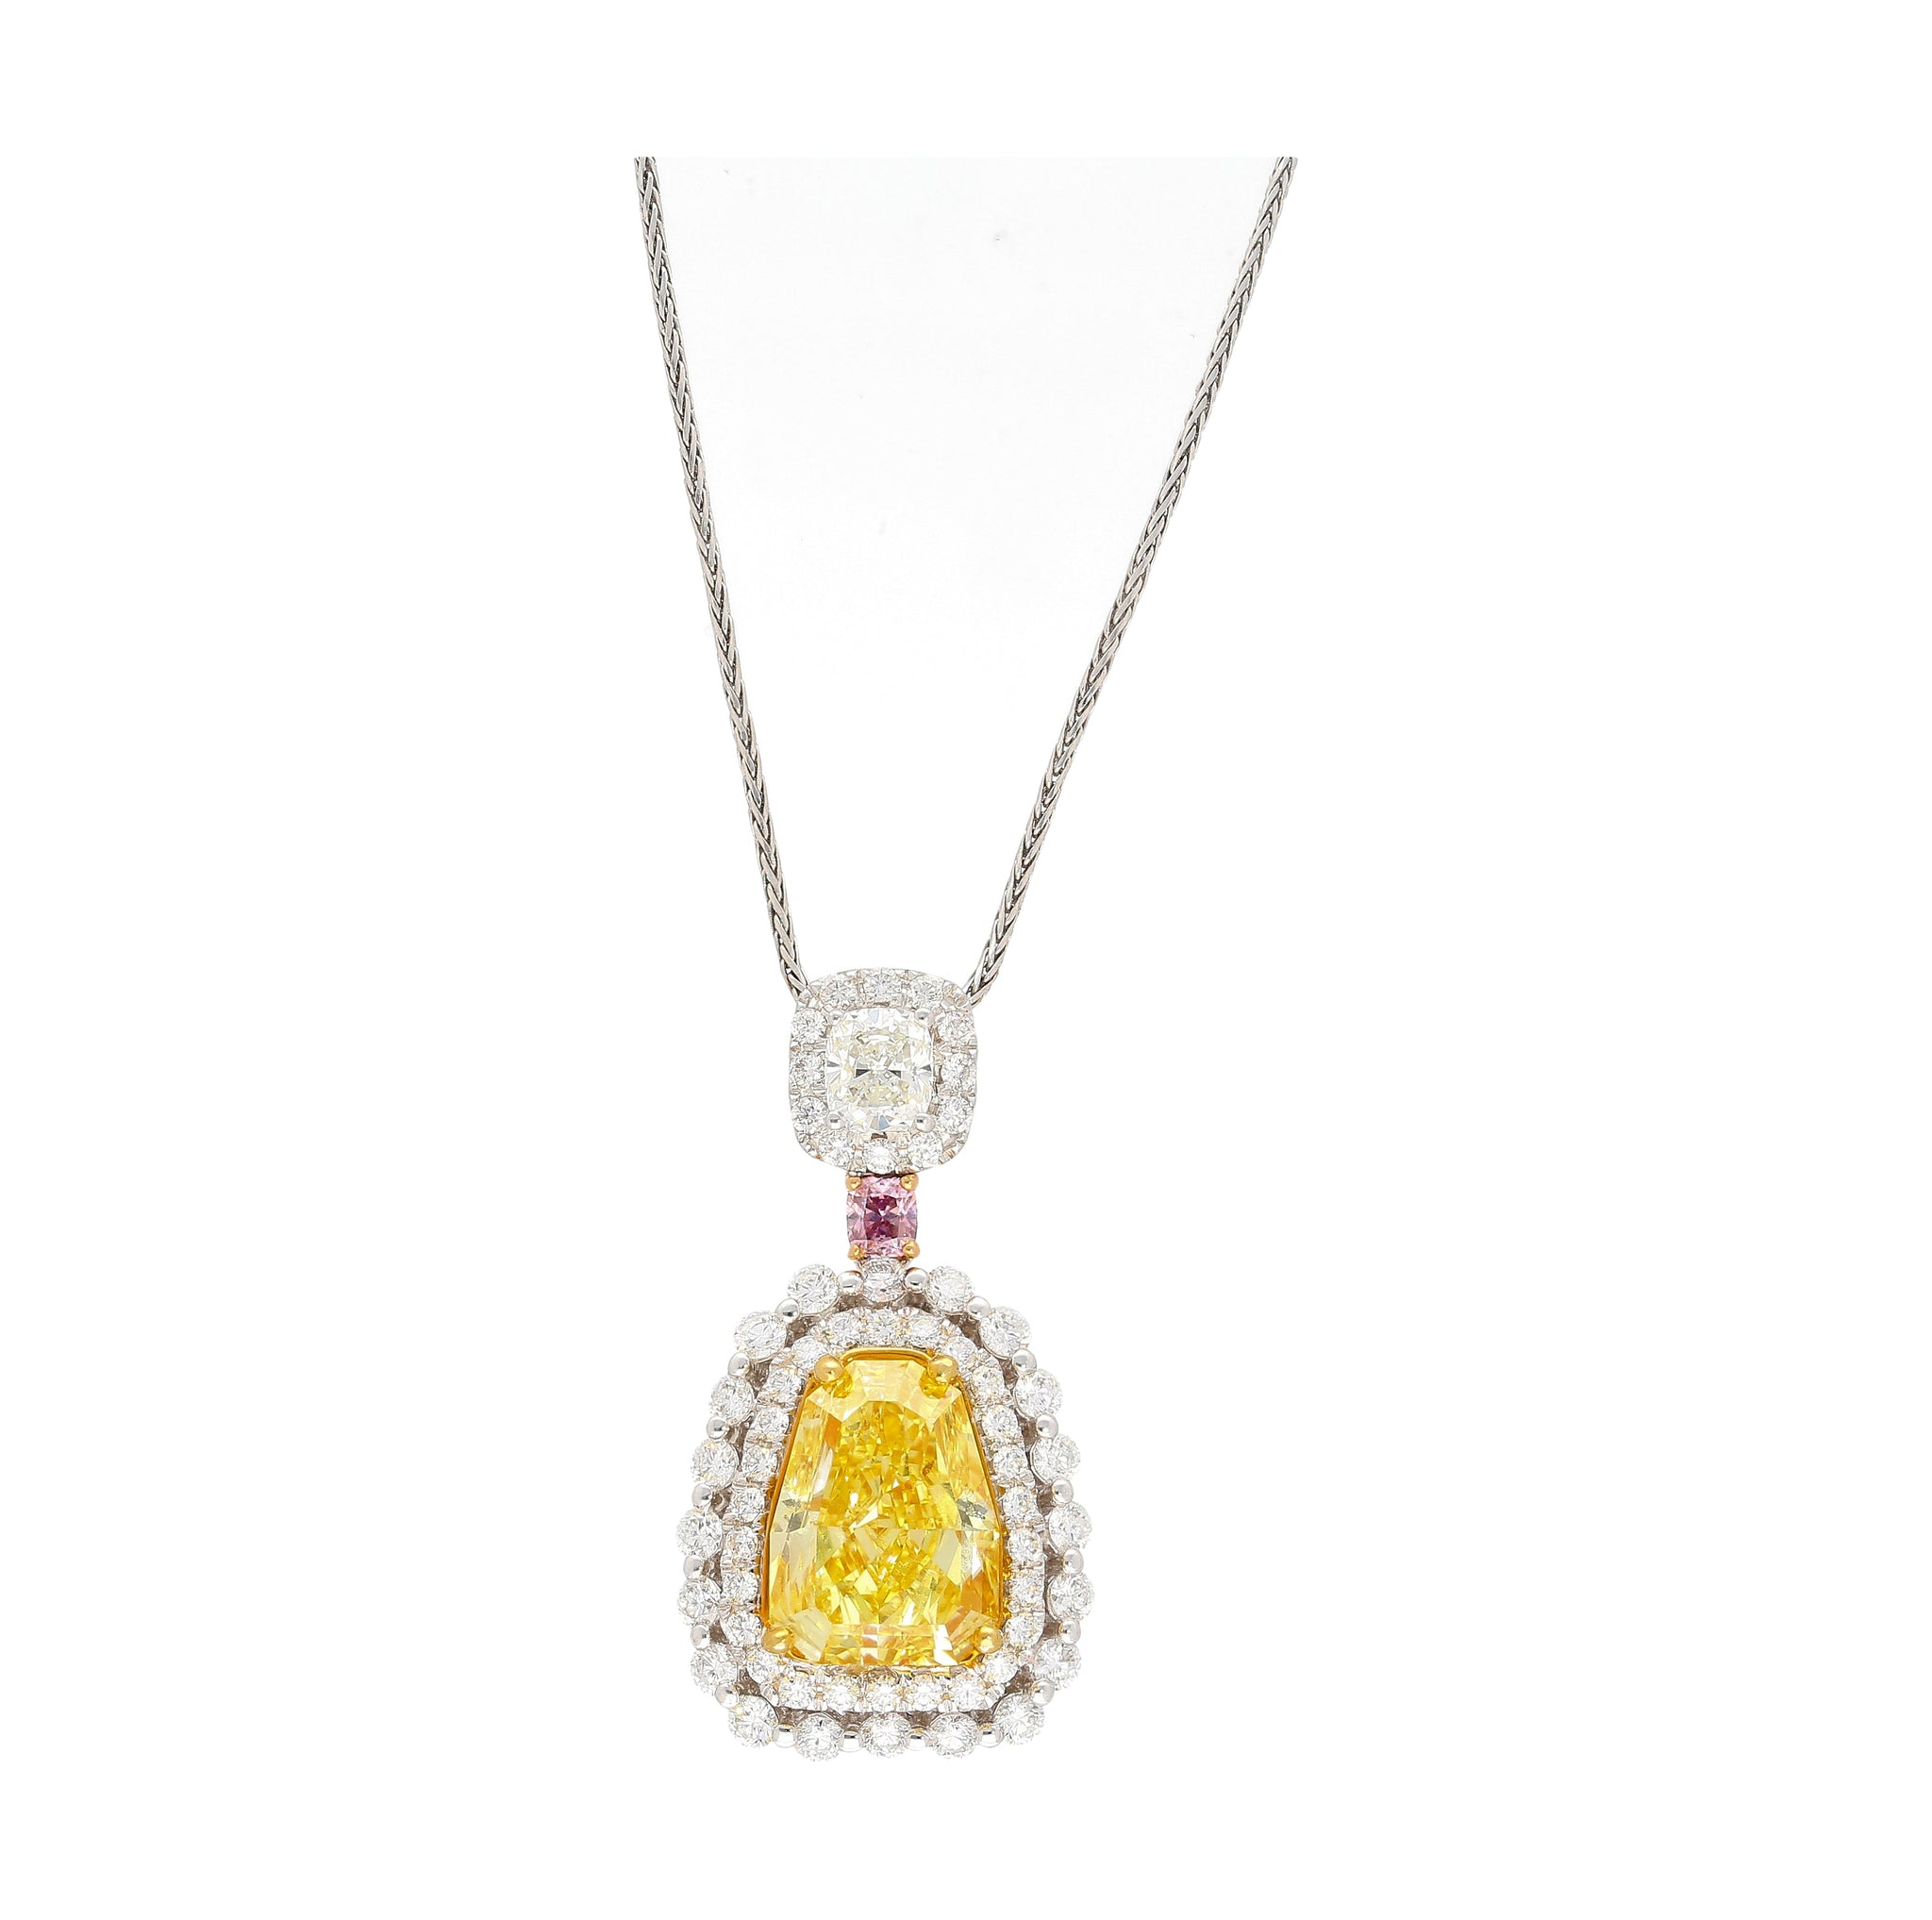 GIA Certified 3.28 Carat Fancy Intense Yellow Shield Kite Cut Natural Diamond Pendant Necklace